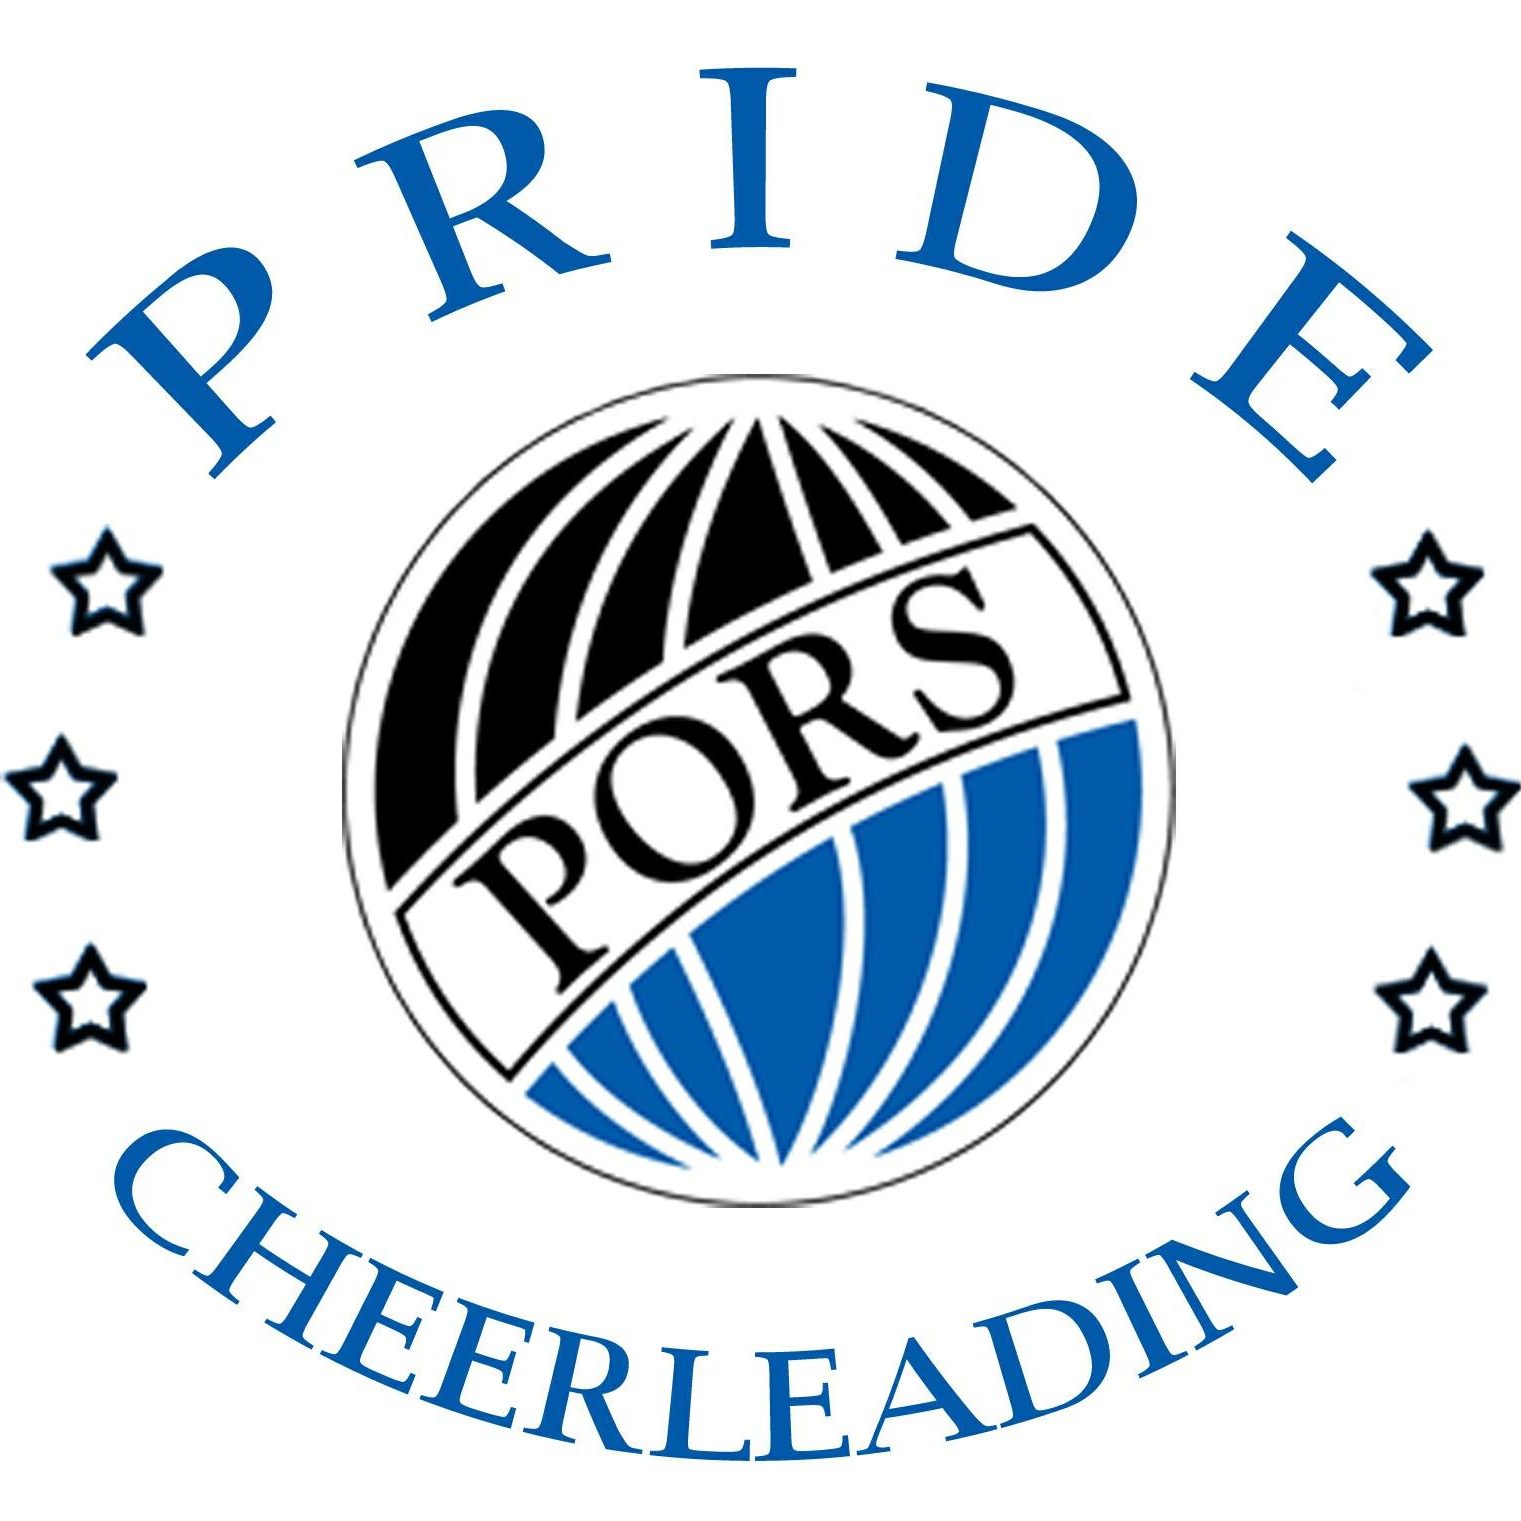 Pors Pride Cheerleading logo